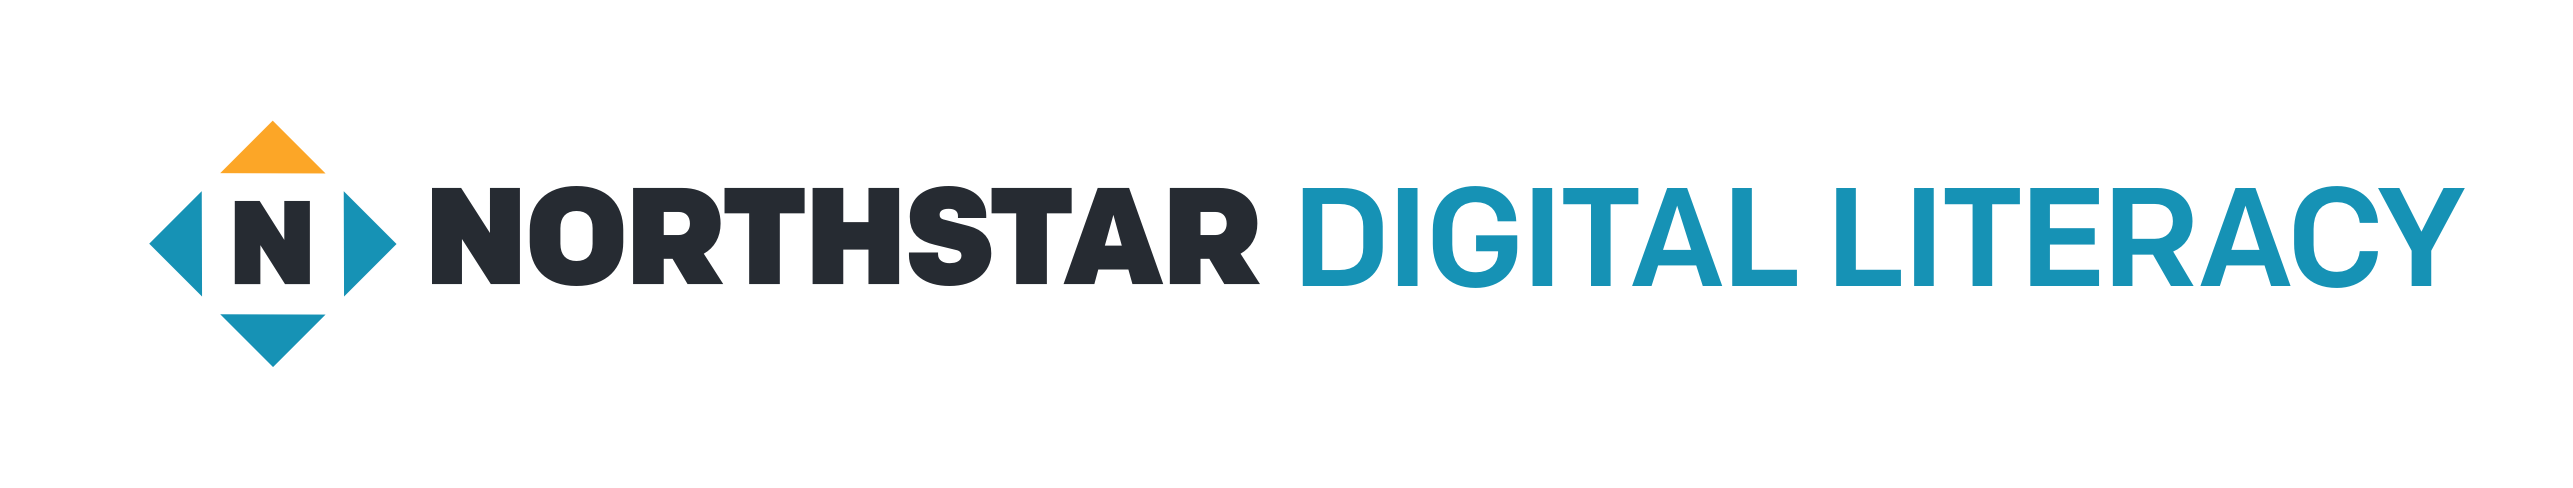 Northstar name logo